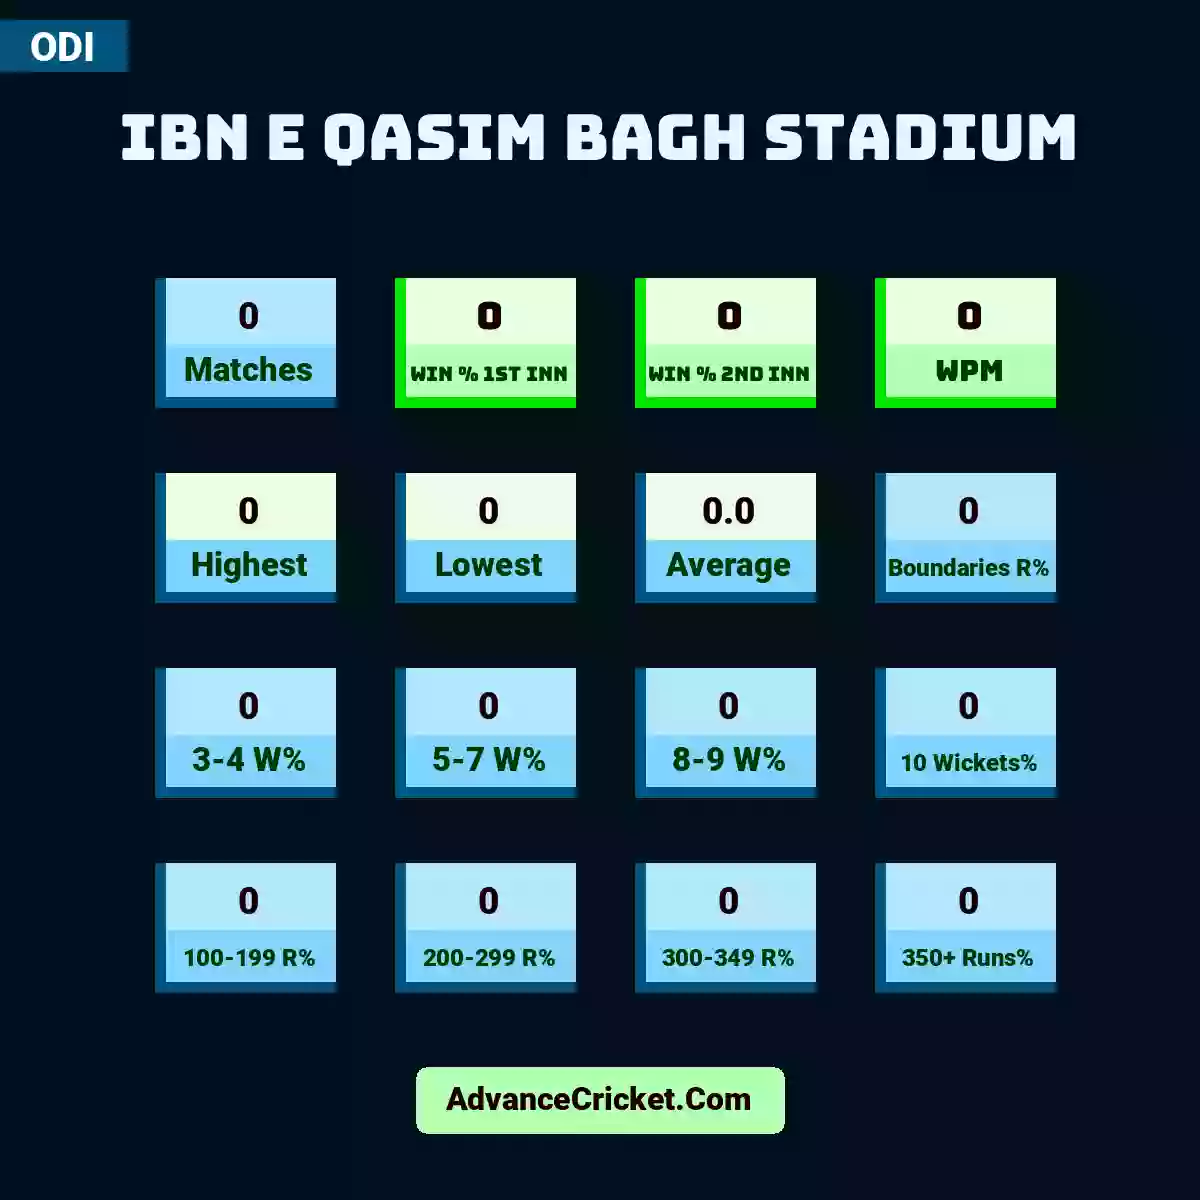 Image showing Ibn e Qasim Bagh Stadium with Matches: 0, Win % 1st Inn: 0, Win % 2nd Inn: 0, WPM: 0, Highest: 0, Lowest: 0, Average: 0.0, Boundaries R%: 0, 3-4 W%: 0, 5-7 W%: 0, 8-9 W%: 0, 10 Wickets%: 0, 100-199 R%: 0, 200-299 R%: 0, 300-349 R%: 0, 350+ Runs%: 0.